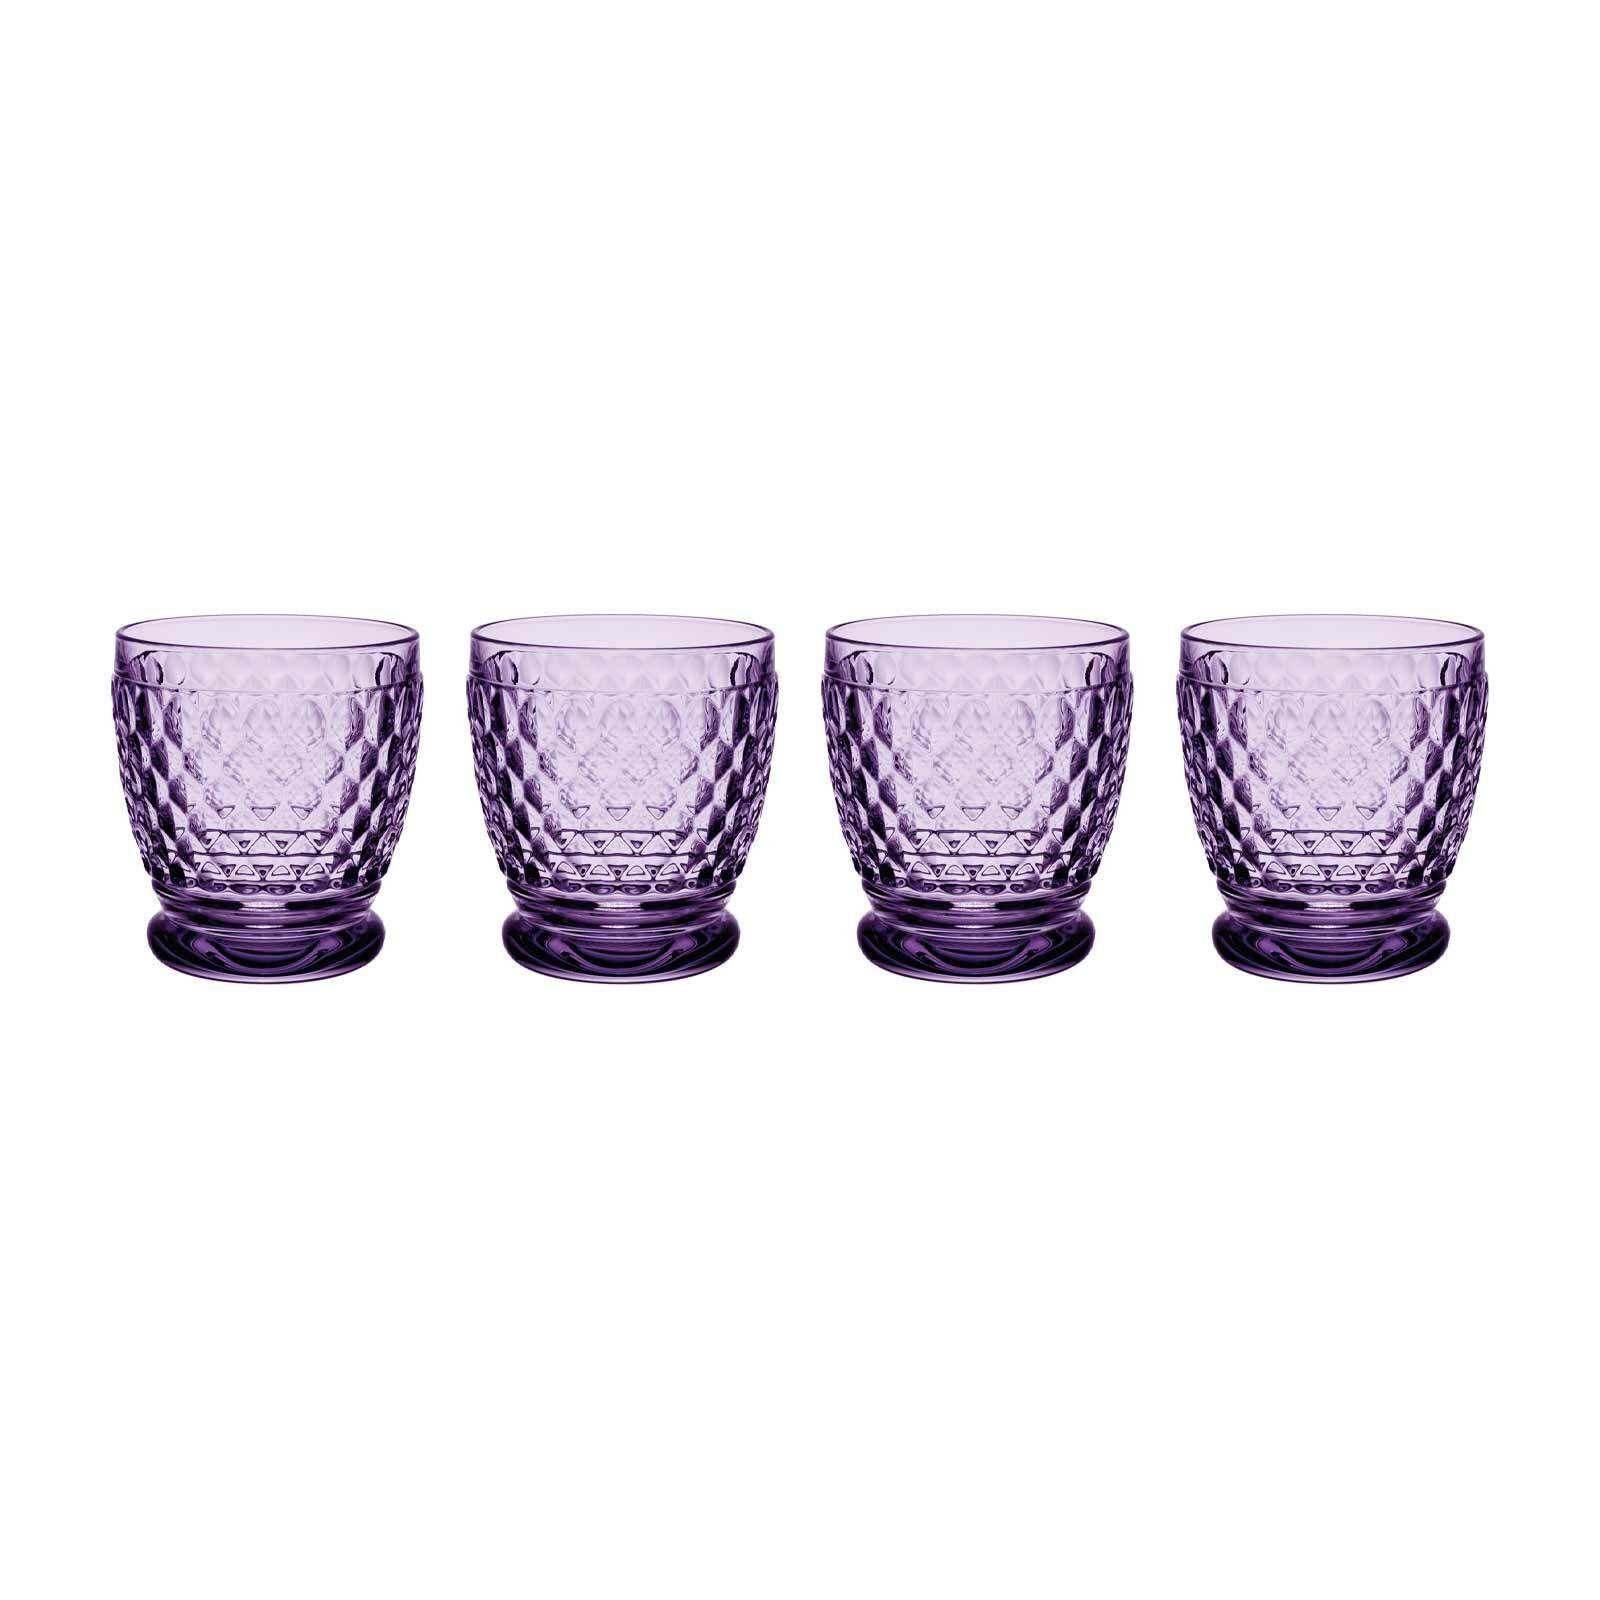 330 Becher Whiskyglas & Boston Lavender Glas Set, Villeroy Coloured Boch ml 4er